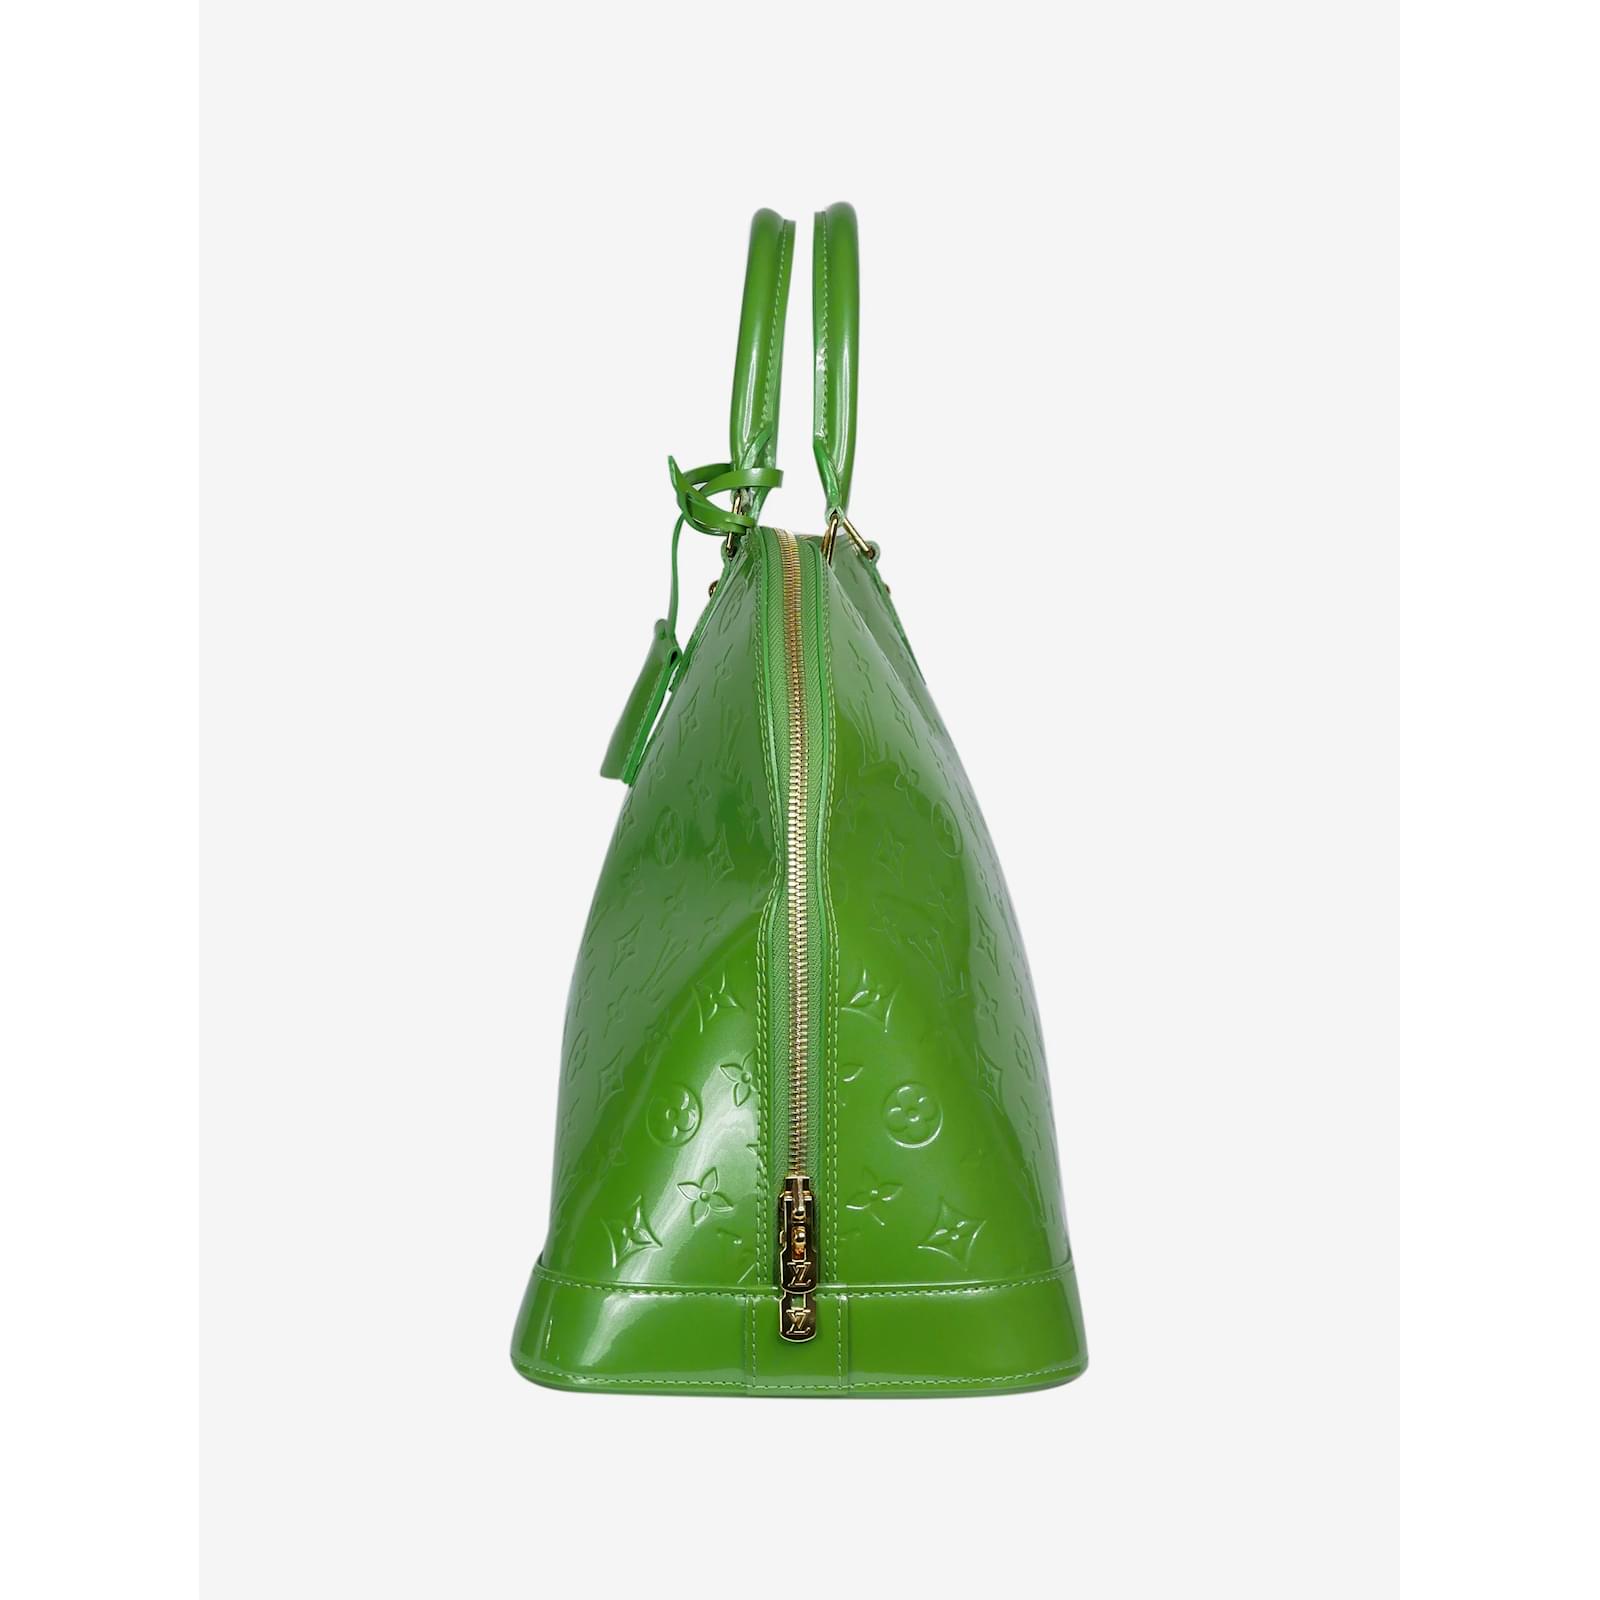 Louis Vuitton Green Vernis Alma Gm